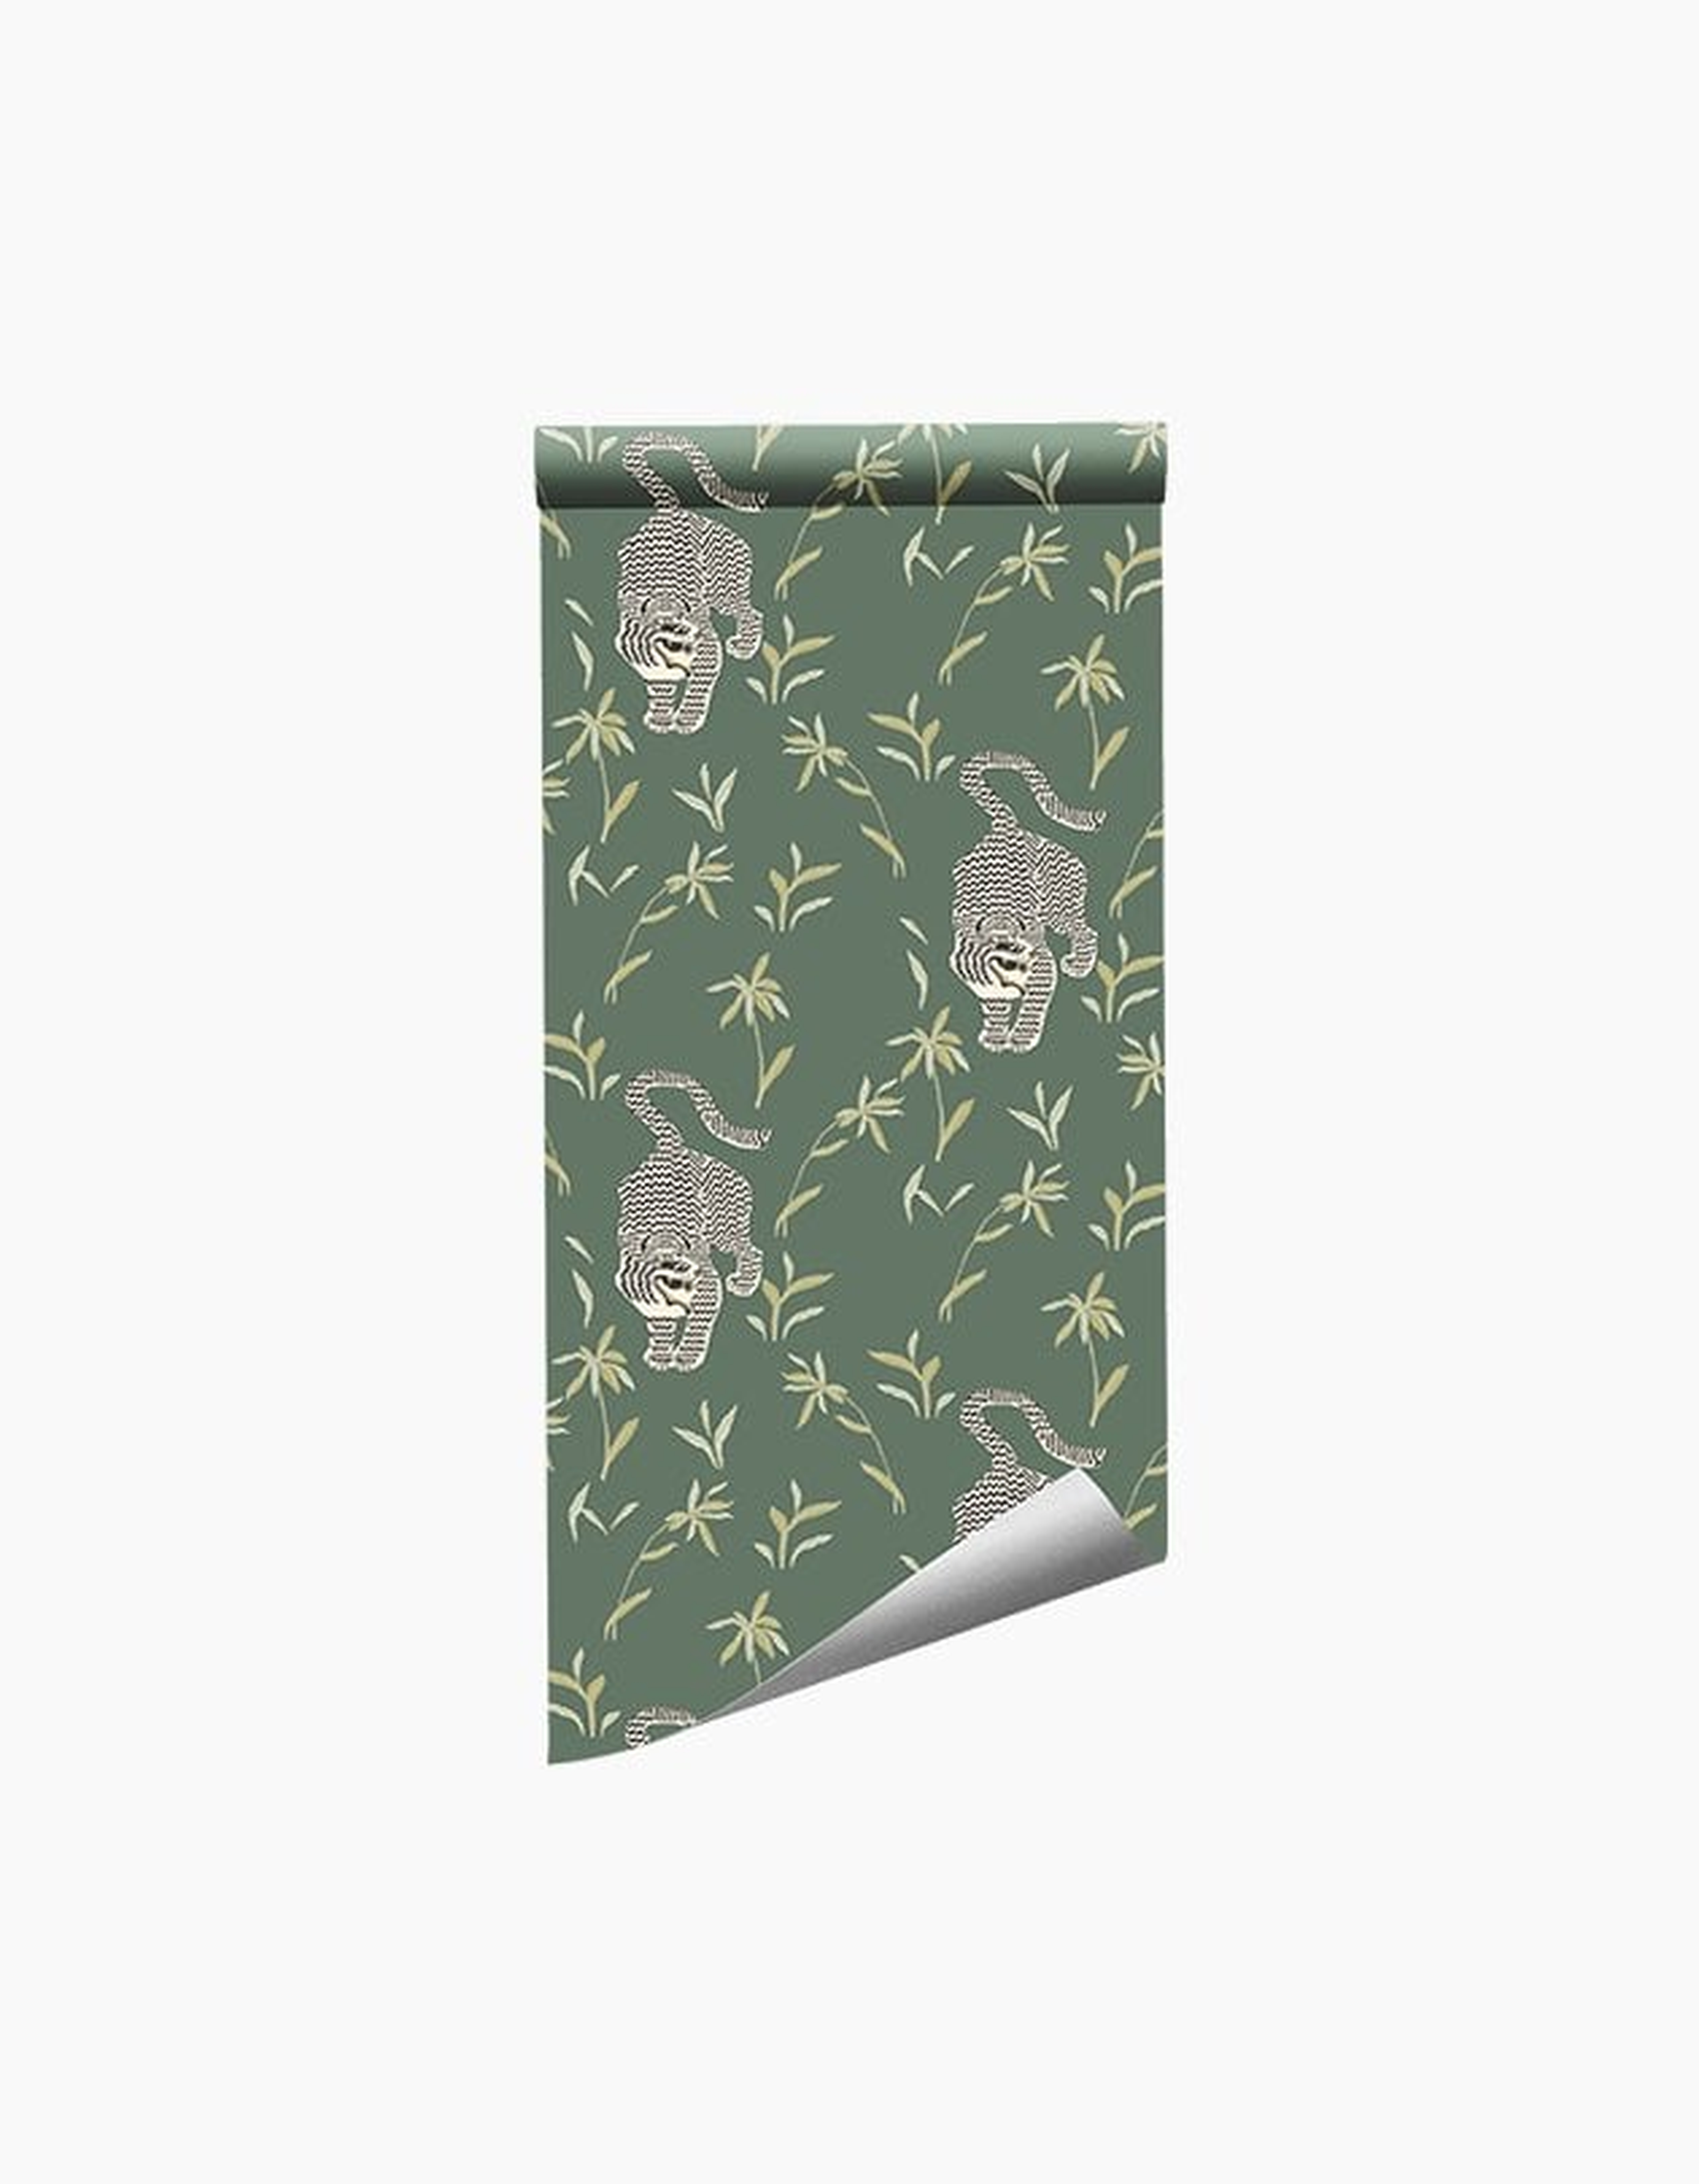 Stalking Tiger Peel & Stick Wallpaper, Green, 2' x 10' - Havenly Print Co.